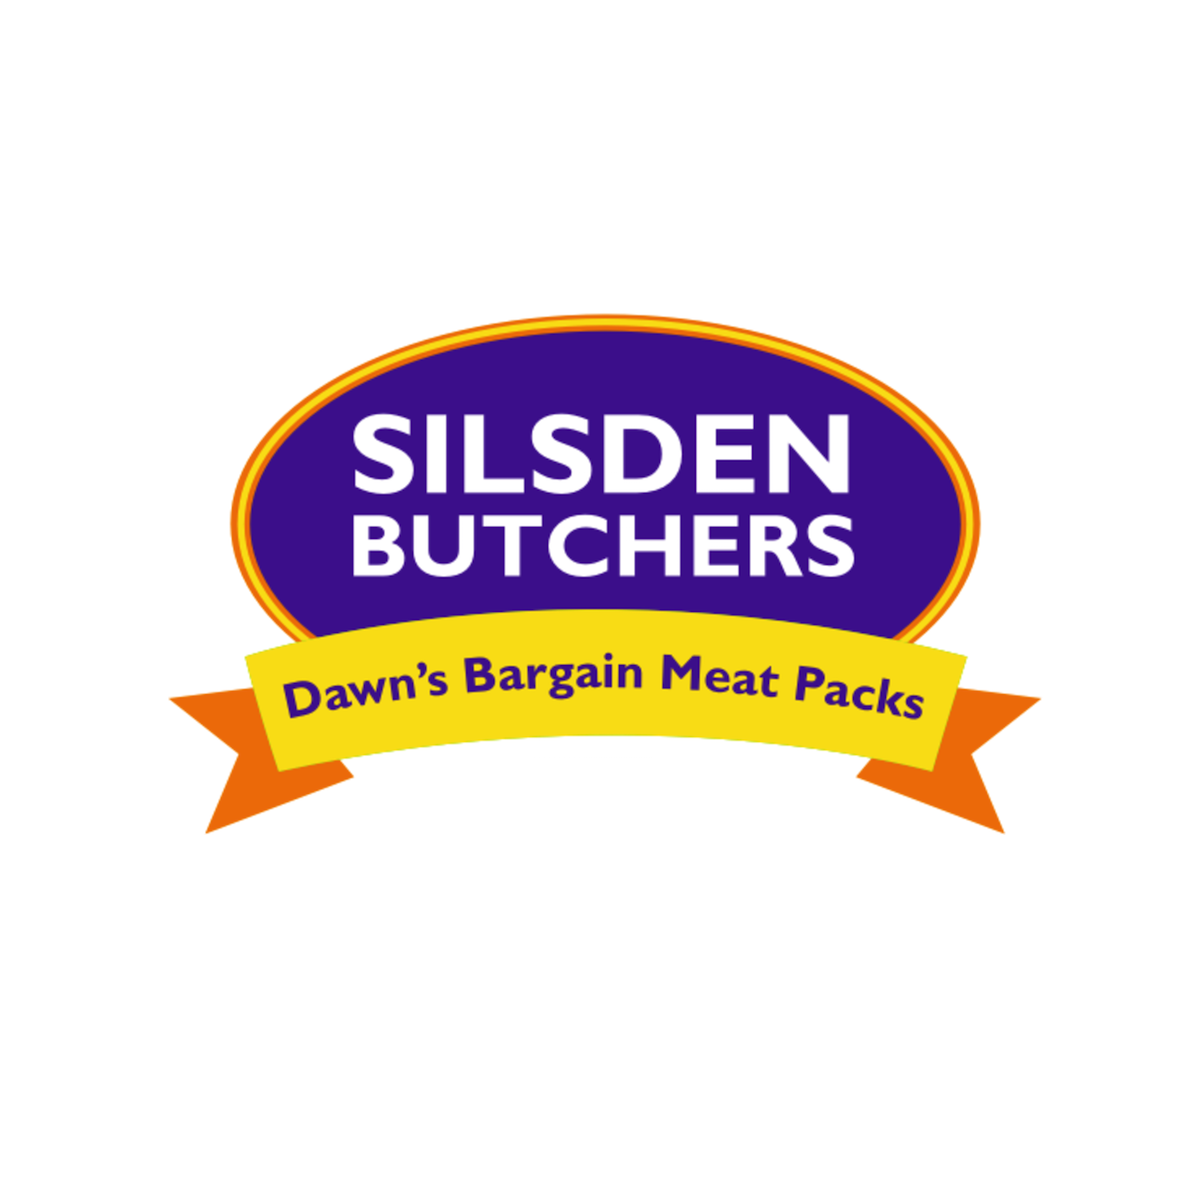 Silsden Butchers brand logo